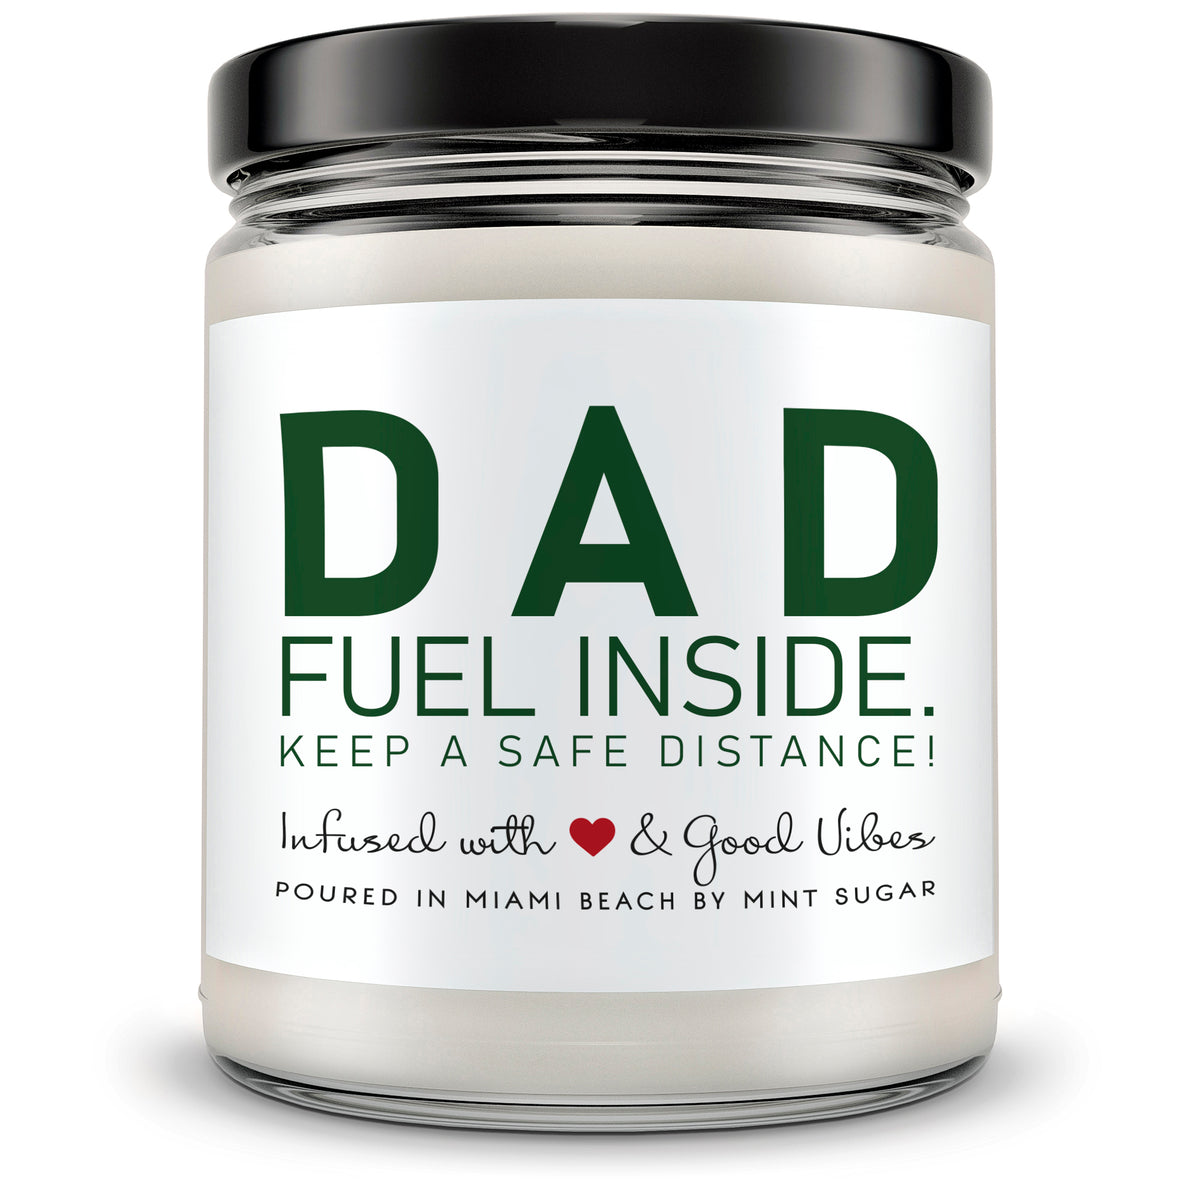 Dad Fuel Inside. Keep a Safe Distance! - Mint Sugar Candle